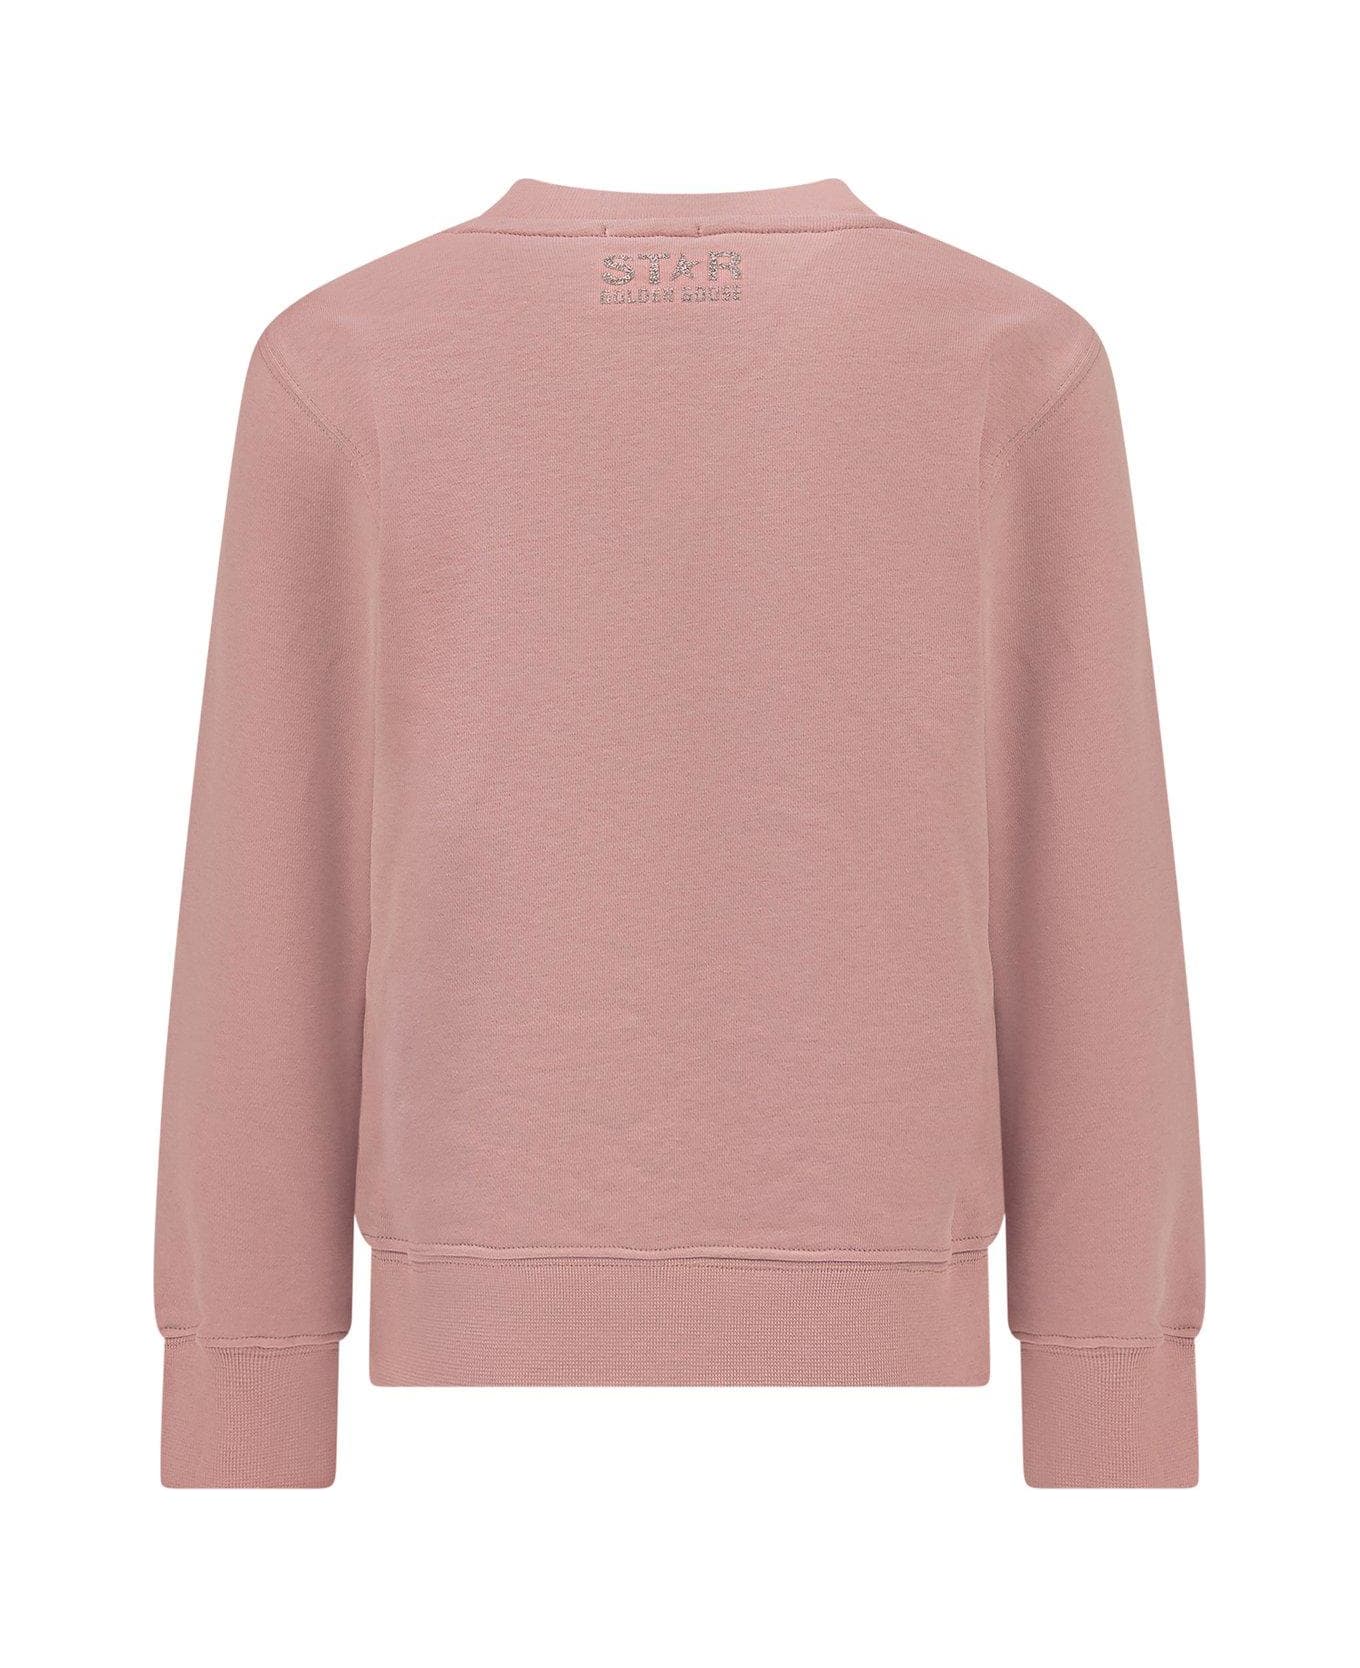 Golden Goose Star Patch Crewneck Sweatshirt - Pink/silver